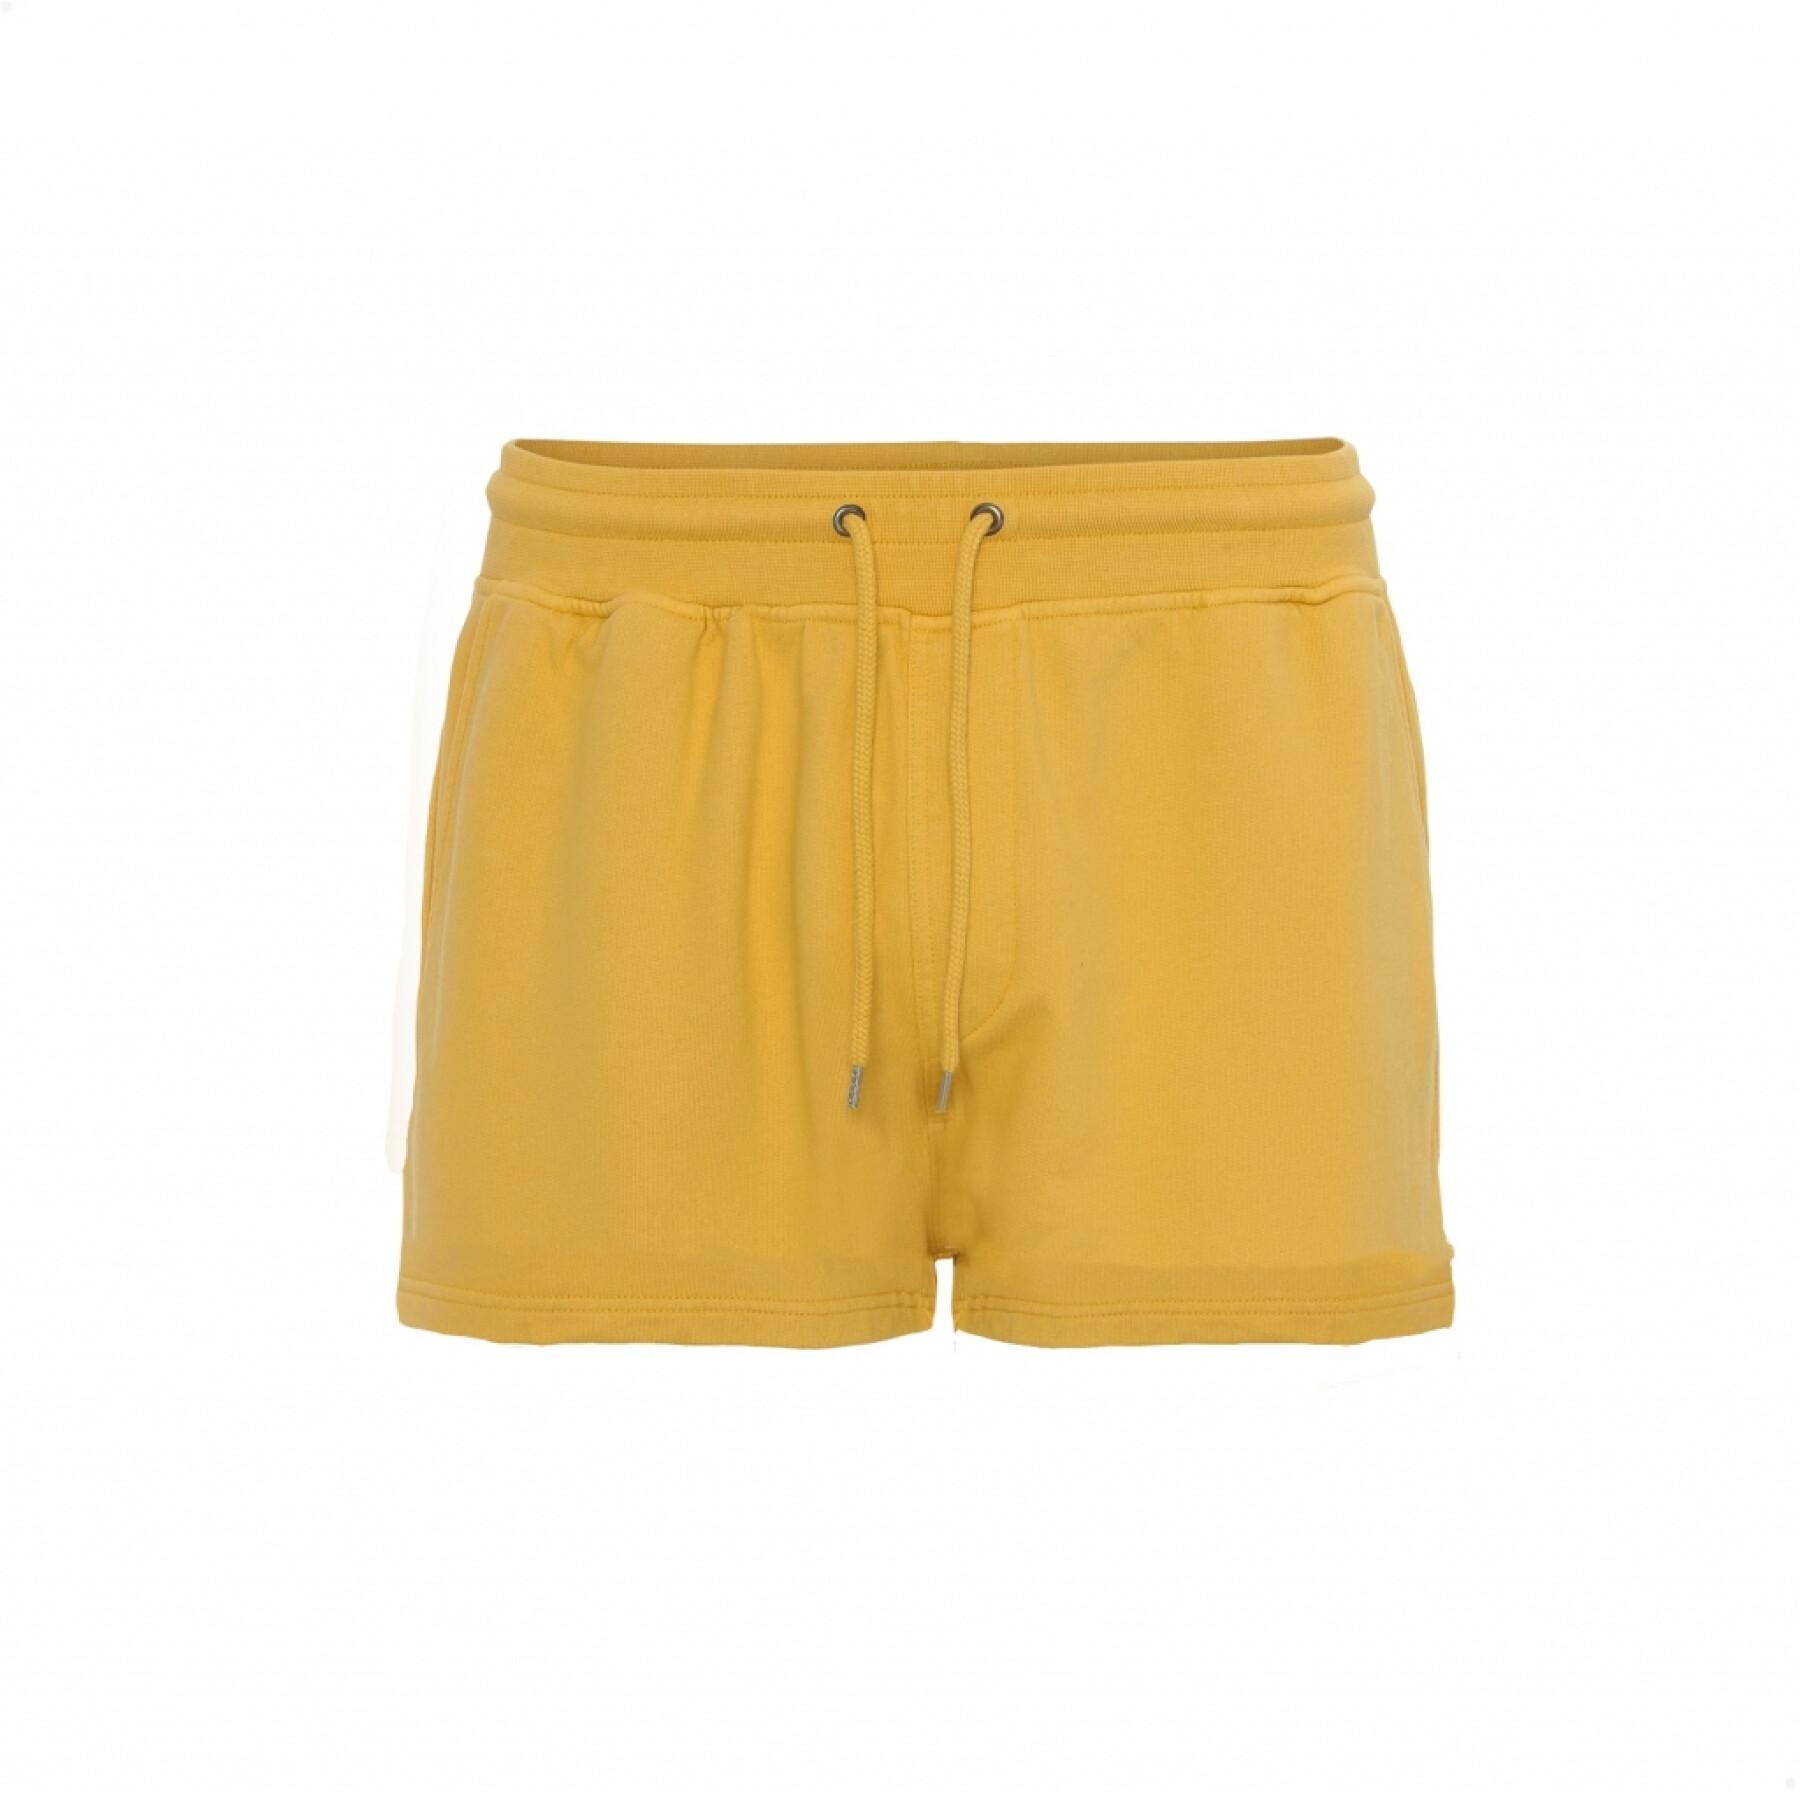 Women's shorts Colorful Standard Organic burned yellow